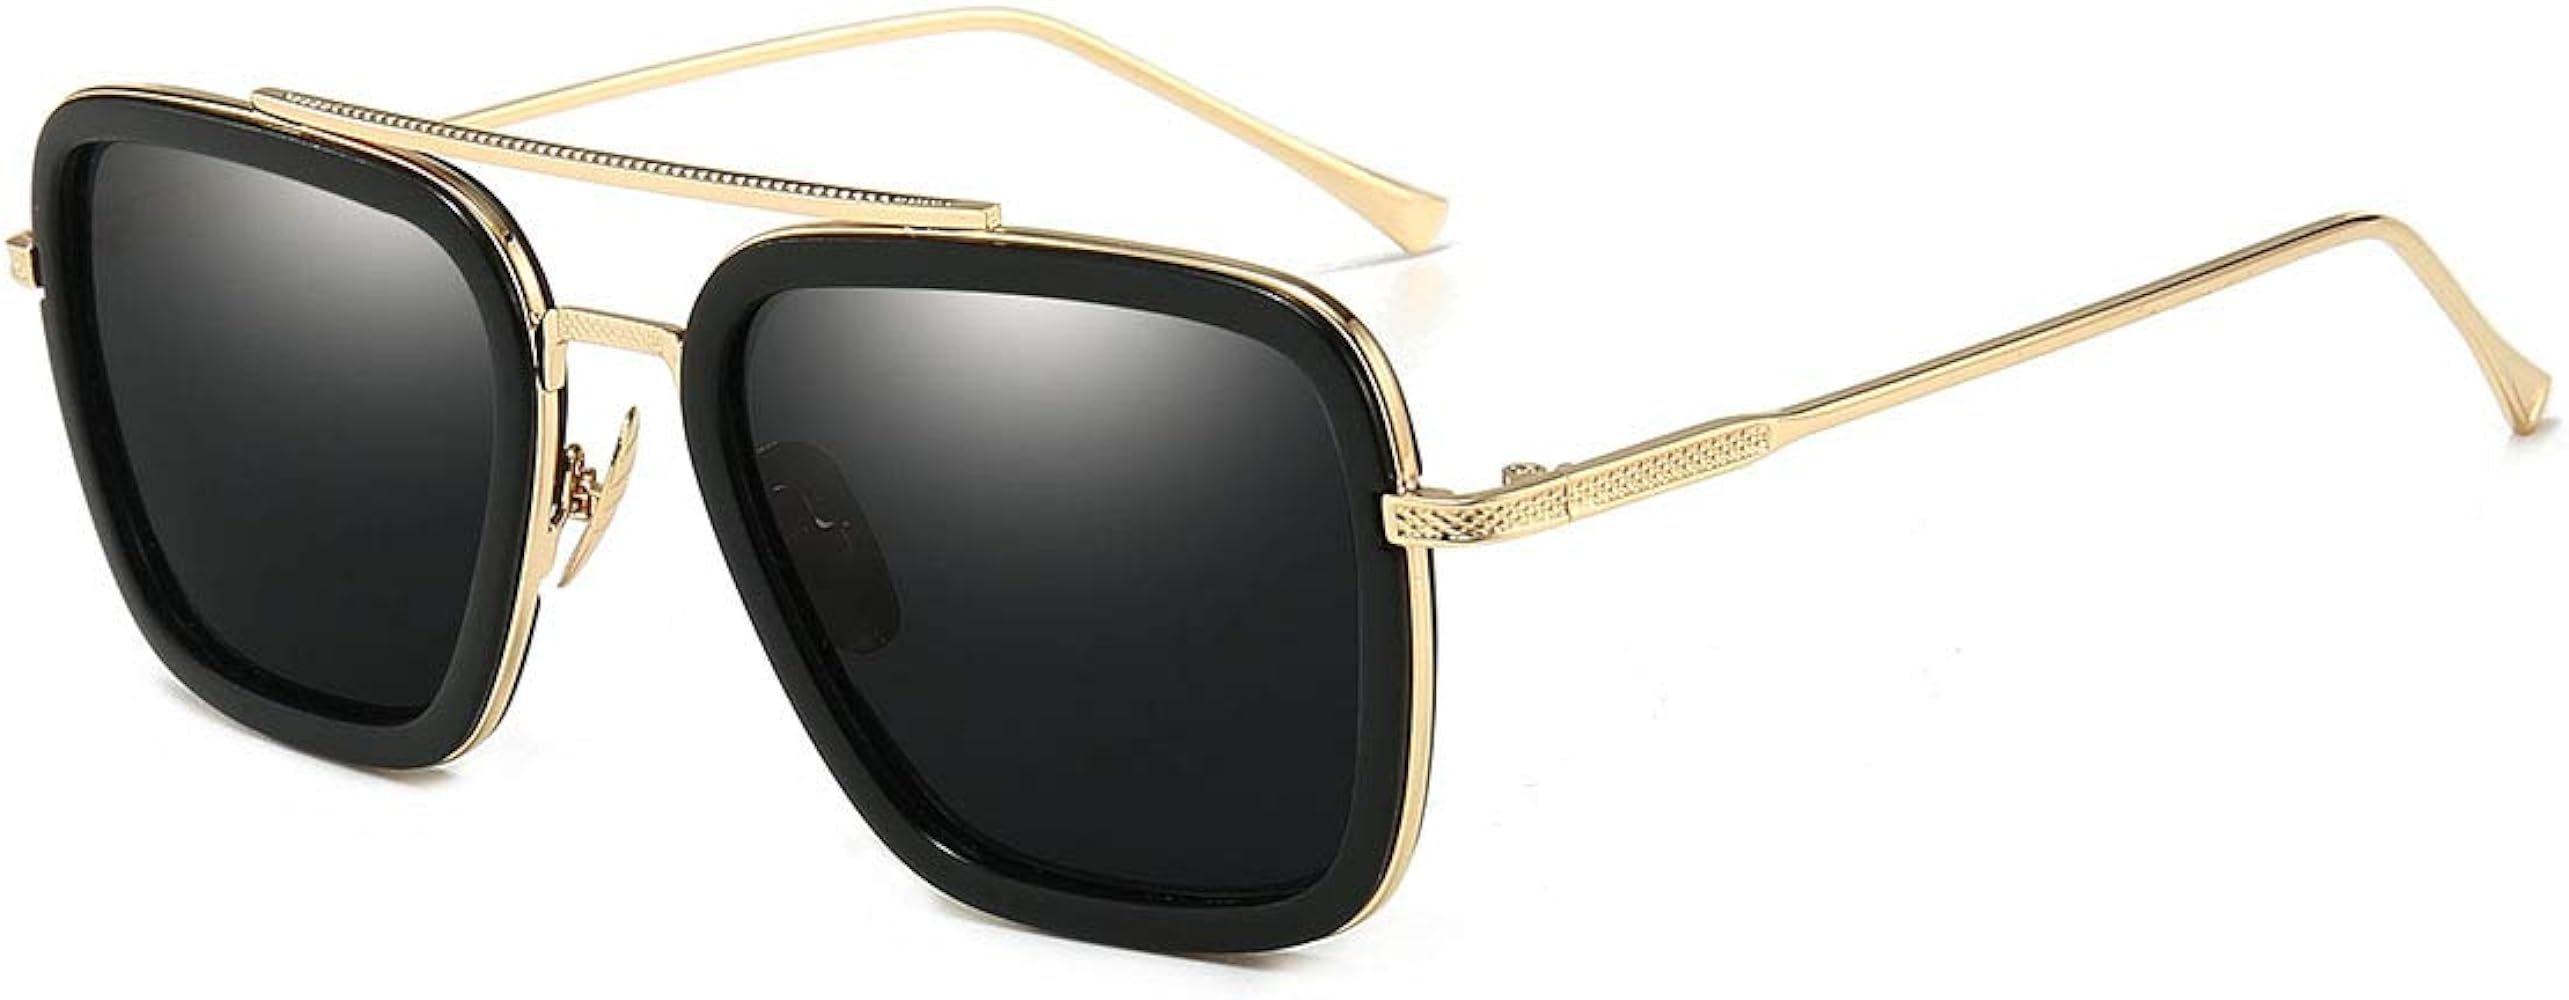 Vintage Aviator Square Sunglasses for Men Gold Frame Retro Brand Classic Tony Stark Sunglasses | Amazon (US)